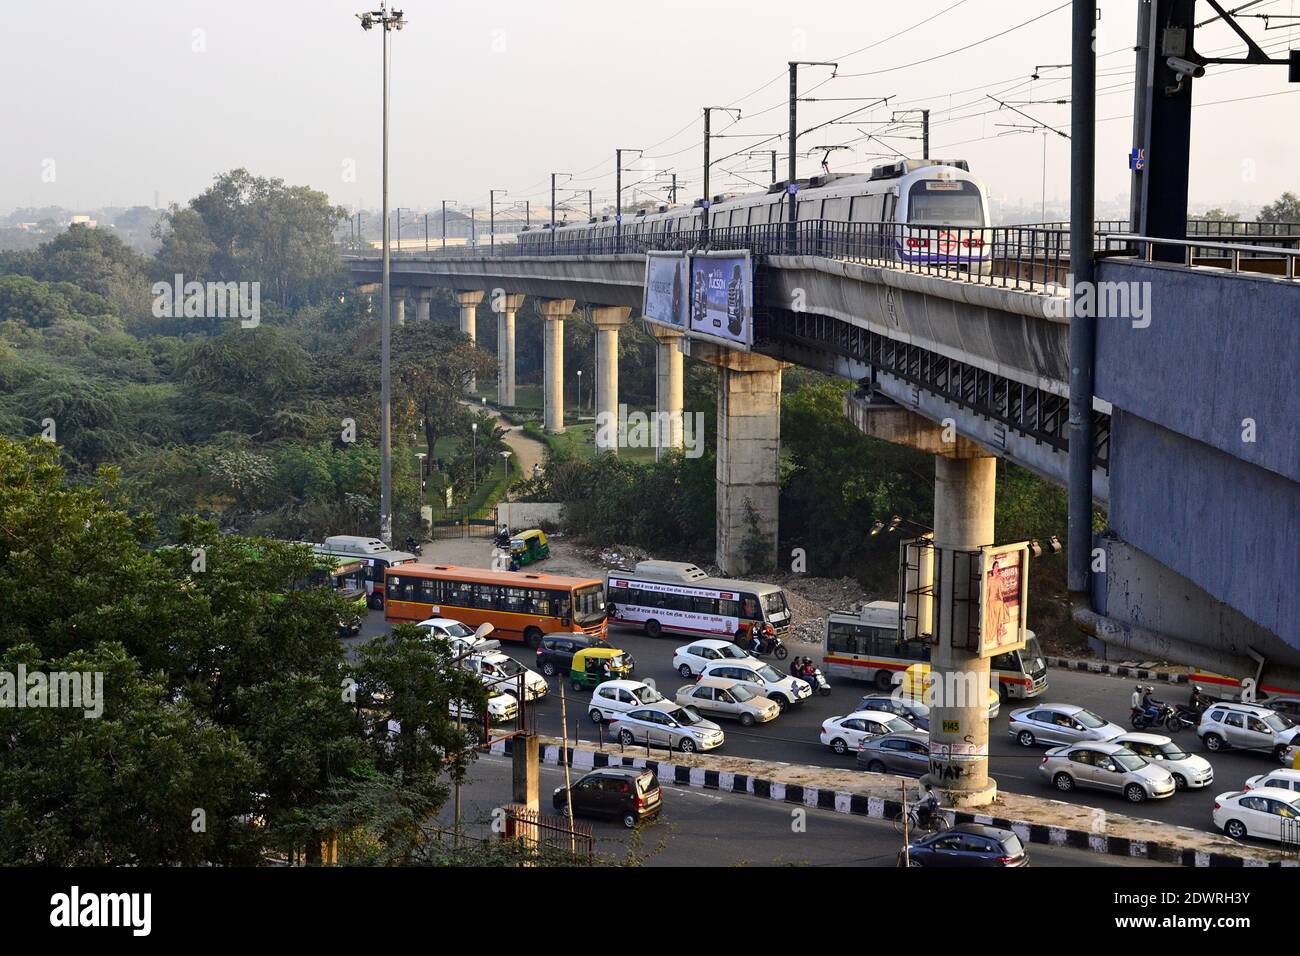 Delhi, India - October, 2016: Delhi metro train on the railway concrete bridge and traffic jam on the road below in the evening Stock Photo